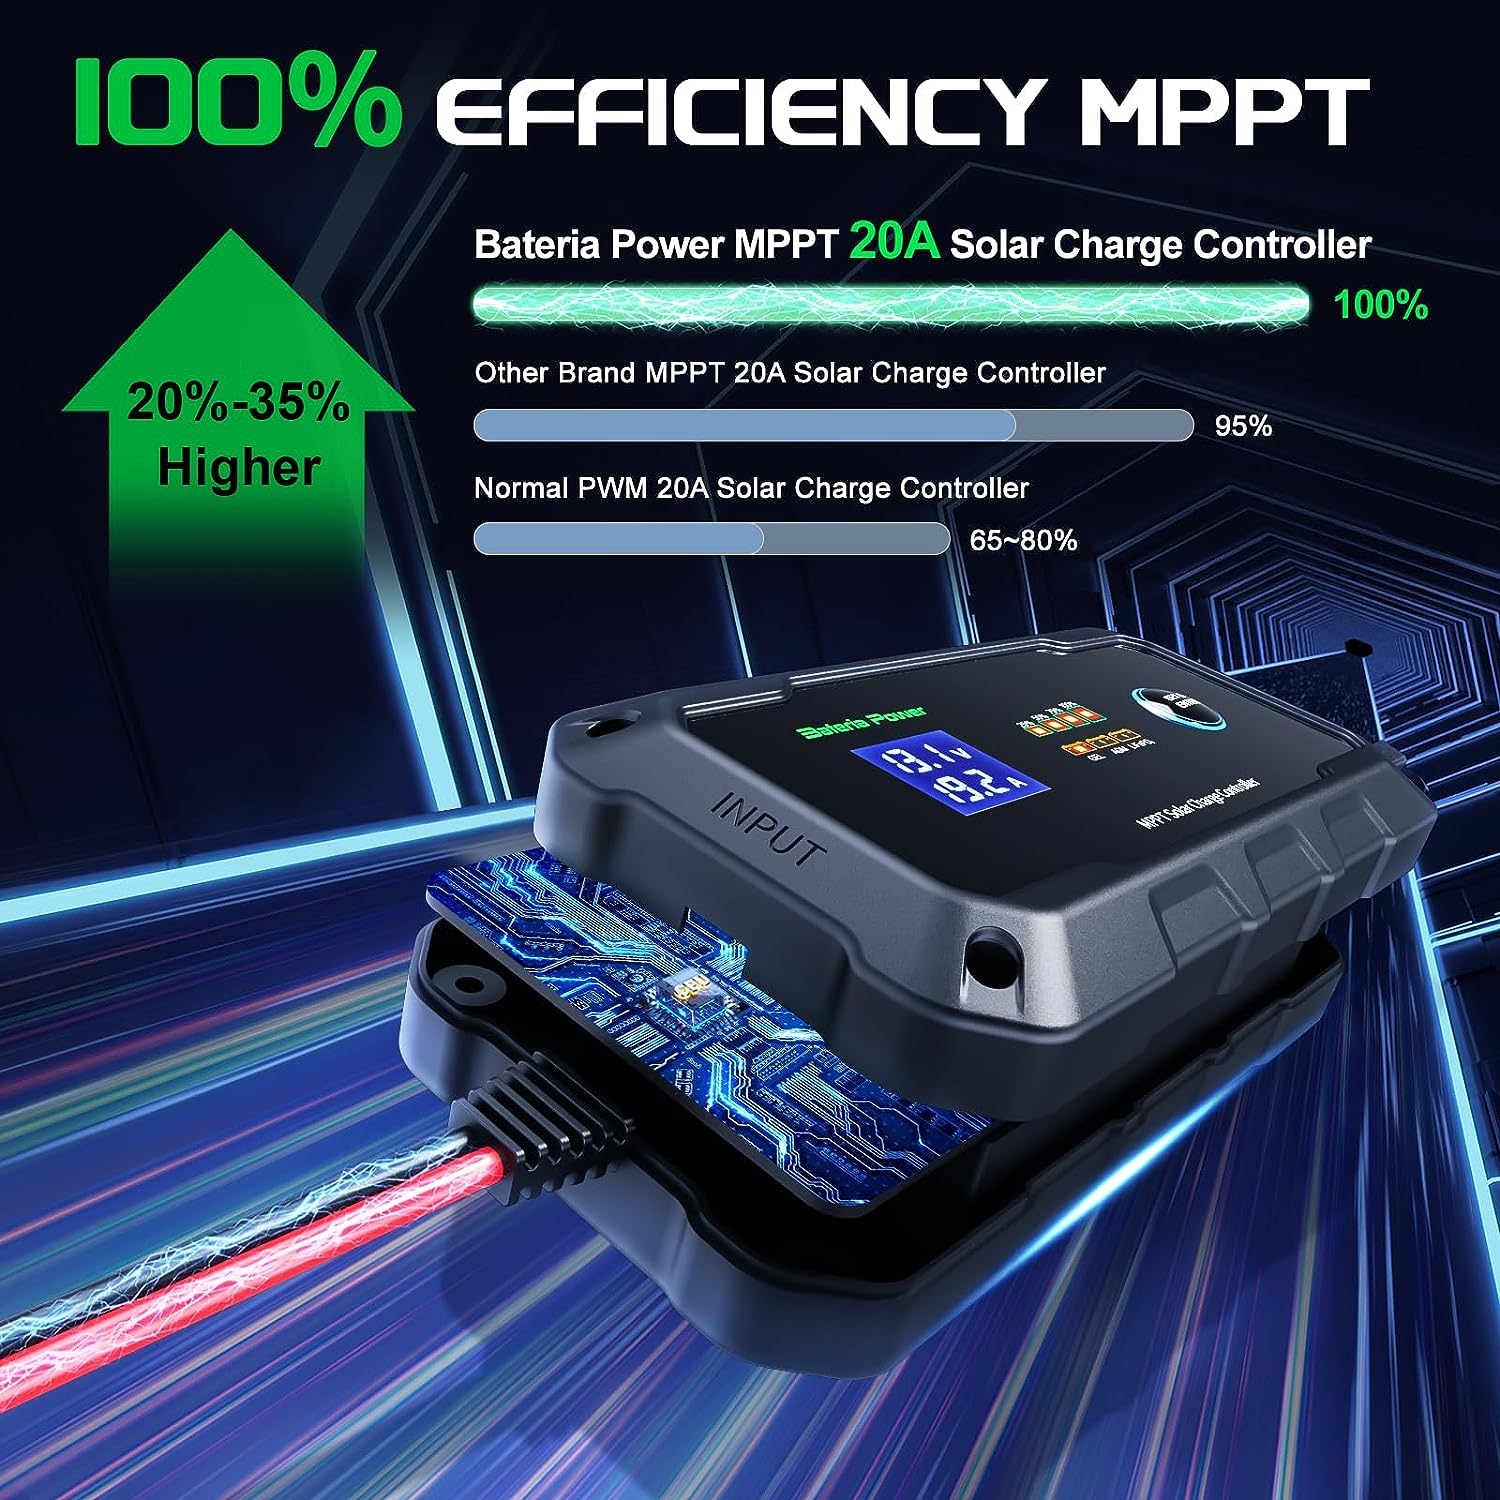 20A 12V/24V MPPT Wireless Solar Charge Controller, Bateria Power Intelligent Solar Panel Regulator 20 Amp BT App Function for 12/24 Volt LiFePO4, Gel, AGM, FLD, SLD, Li Battery